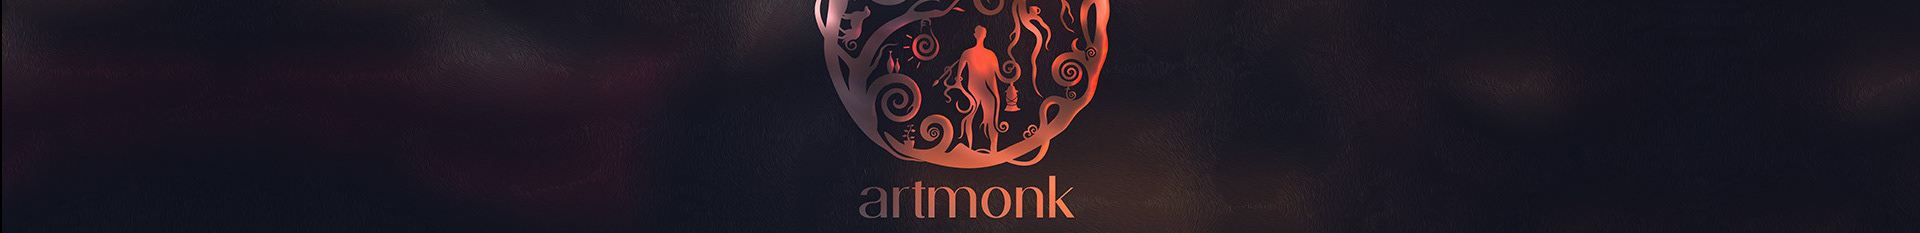 Banner profilu uživatele Artmonk Designs